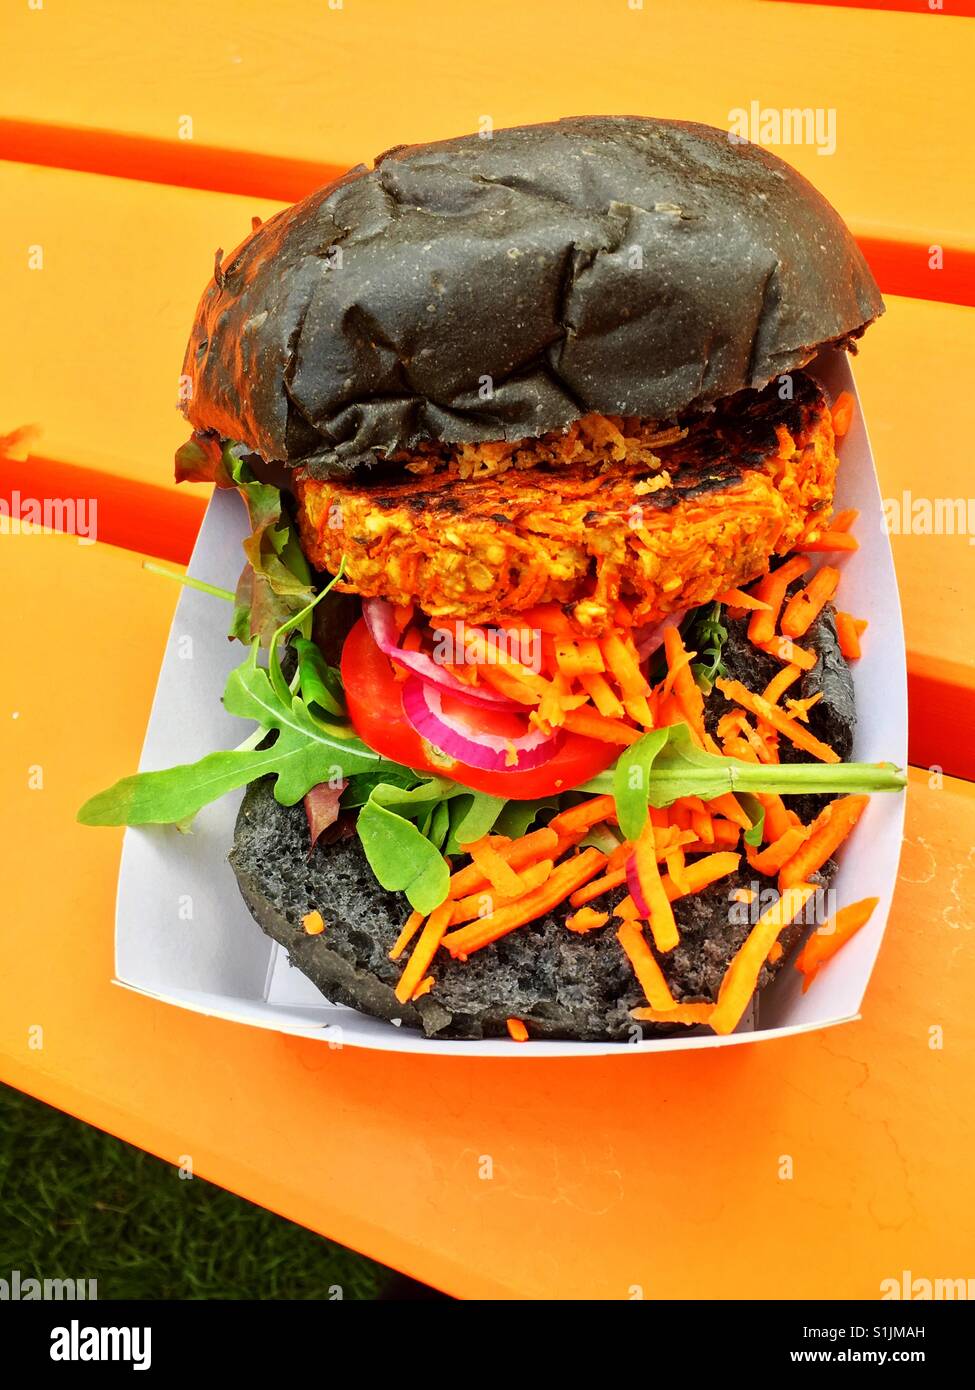 Eating an orange vegetarian carrot burger on a bright orange picnic table Stock Photo